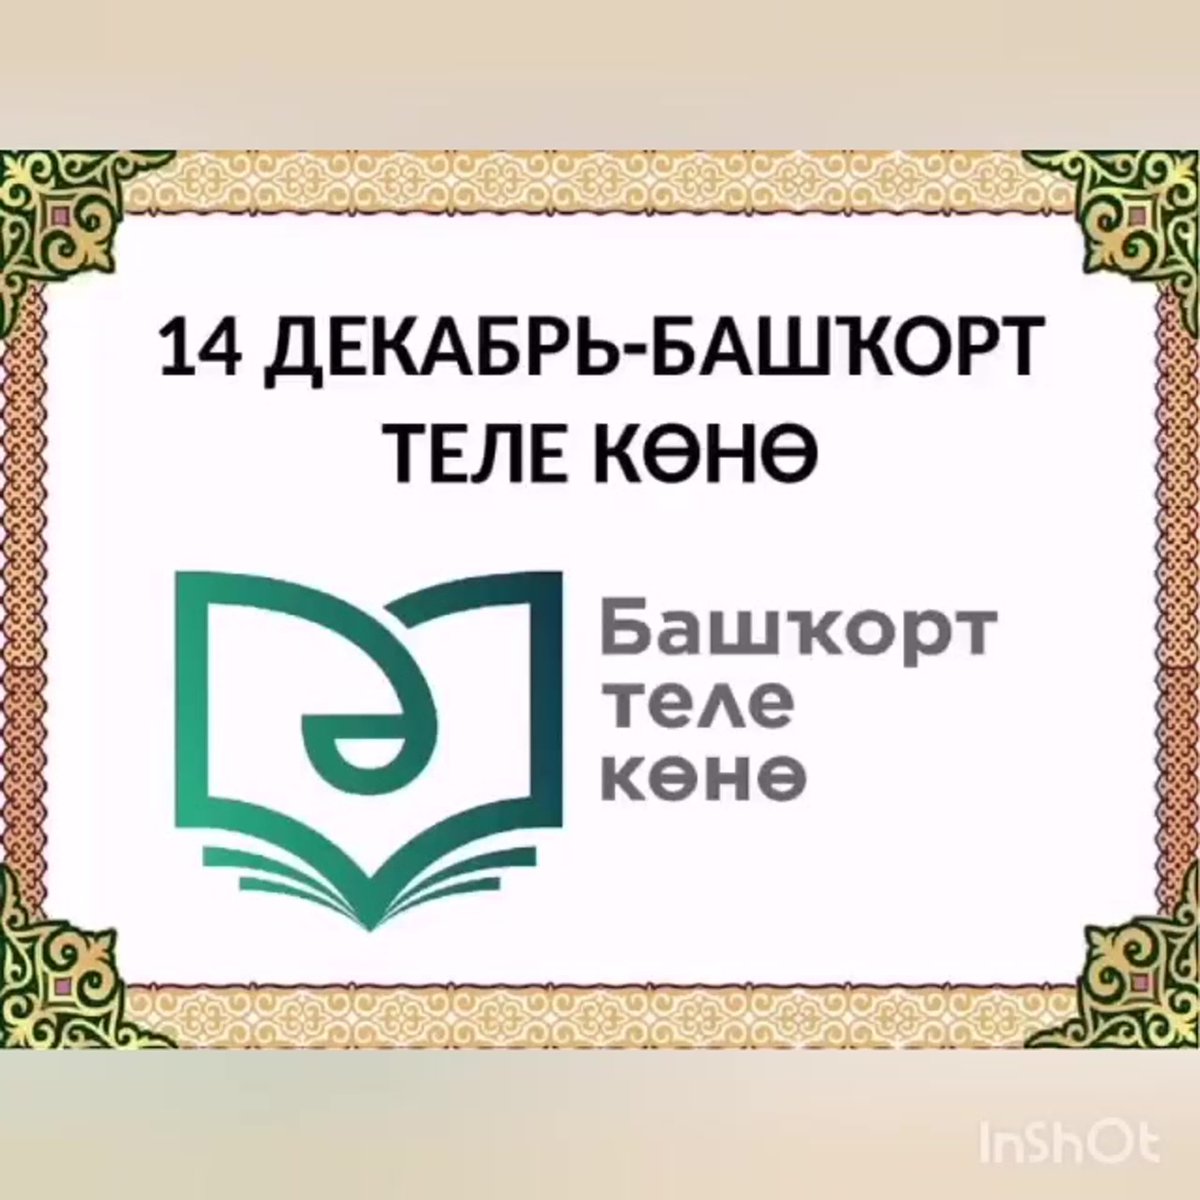 14 Декабря день башкирского языка